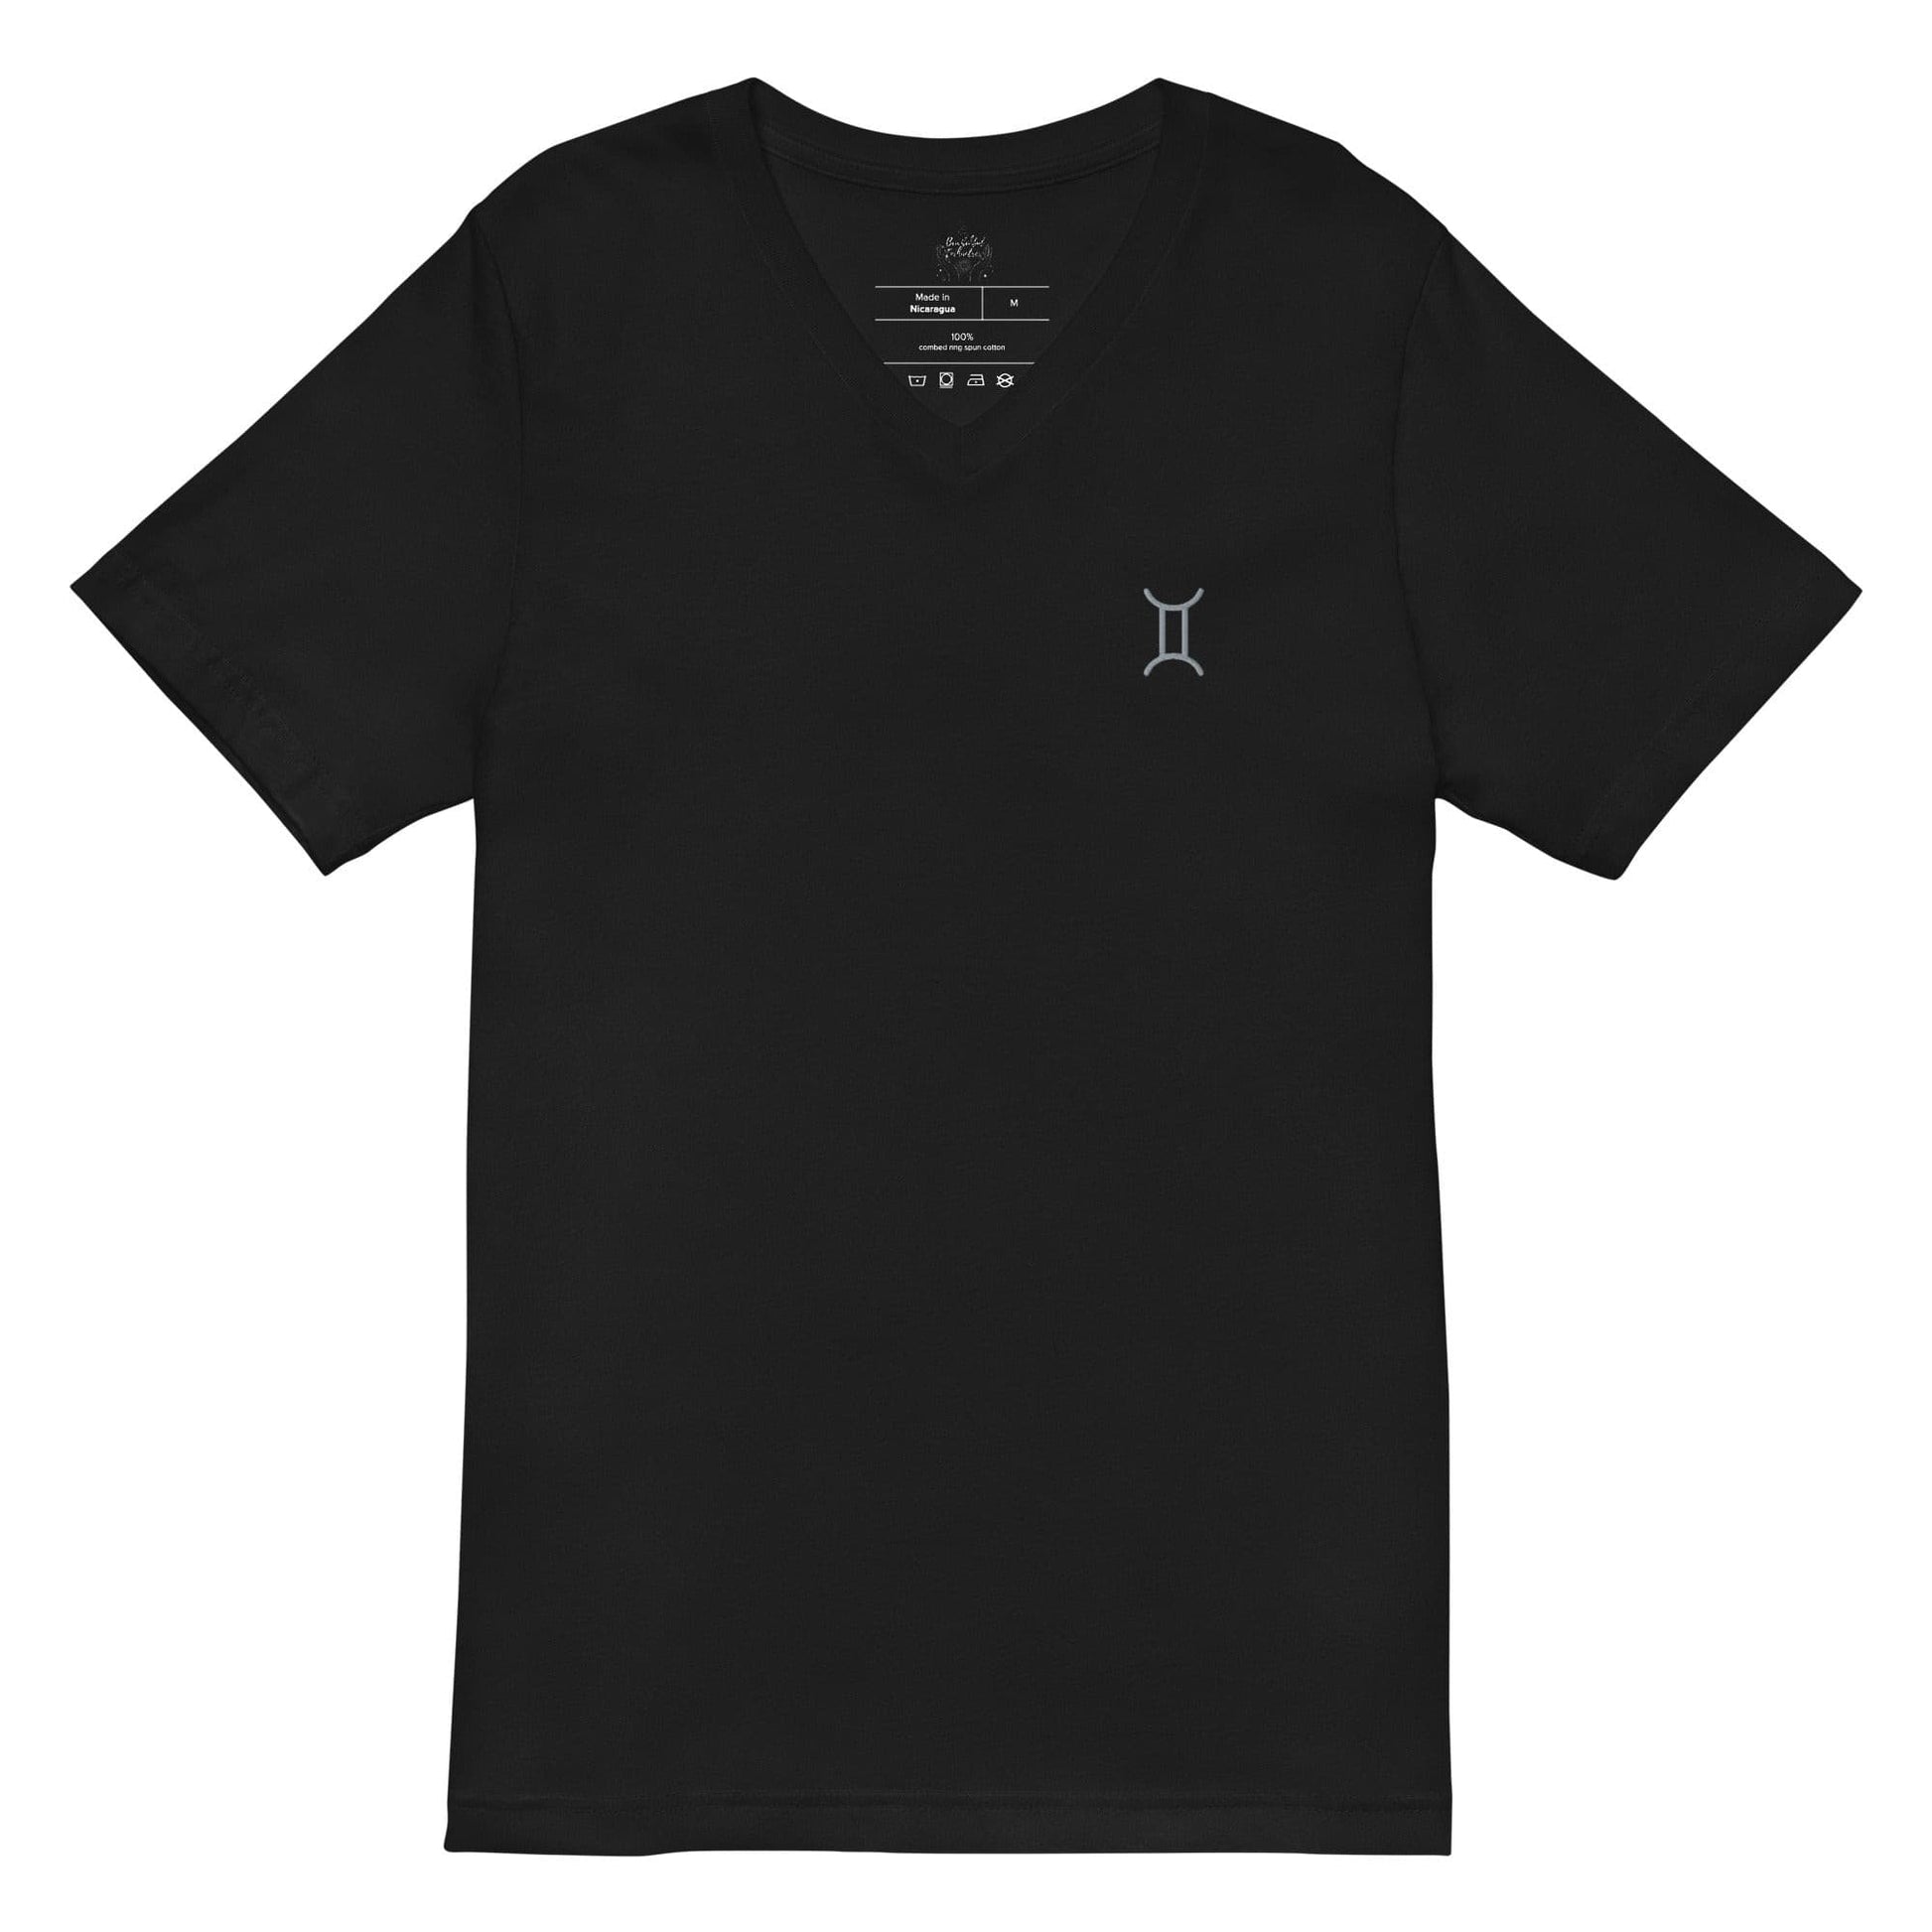 Gemini Unisex Short Sleeve V-Neck T-Shirt.